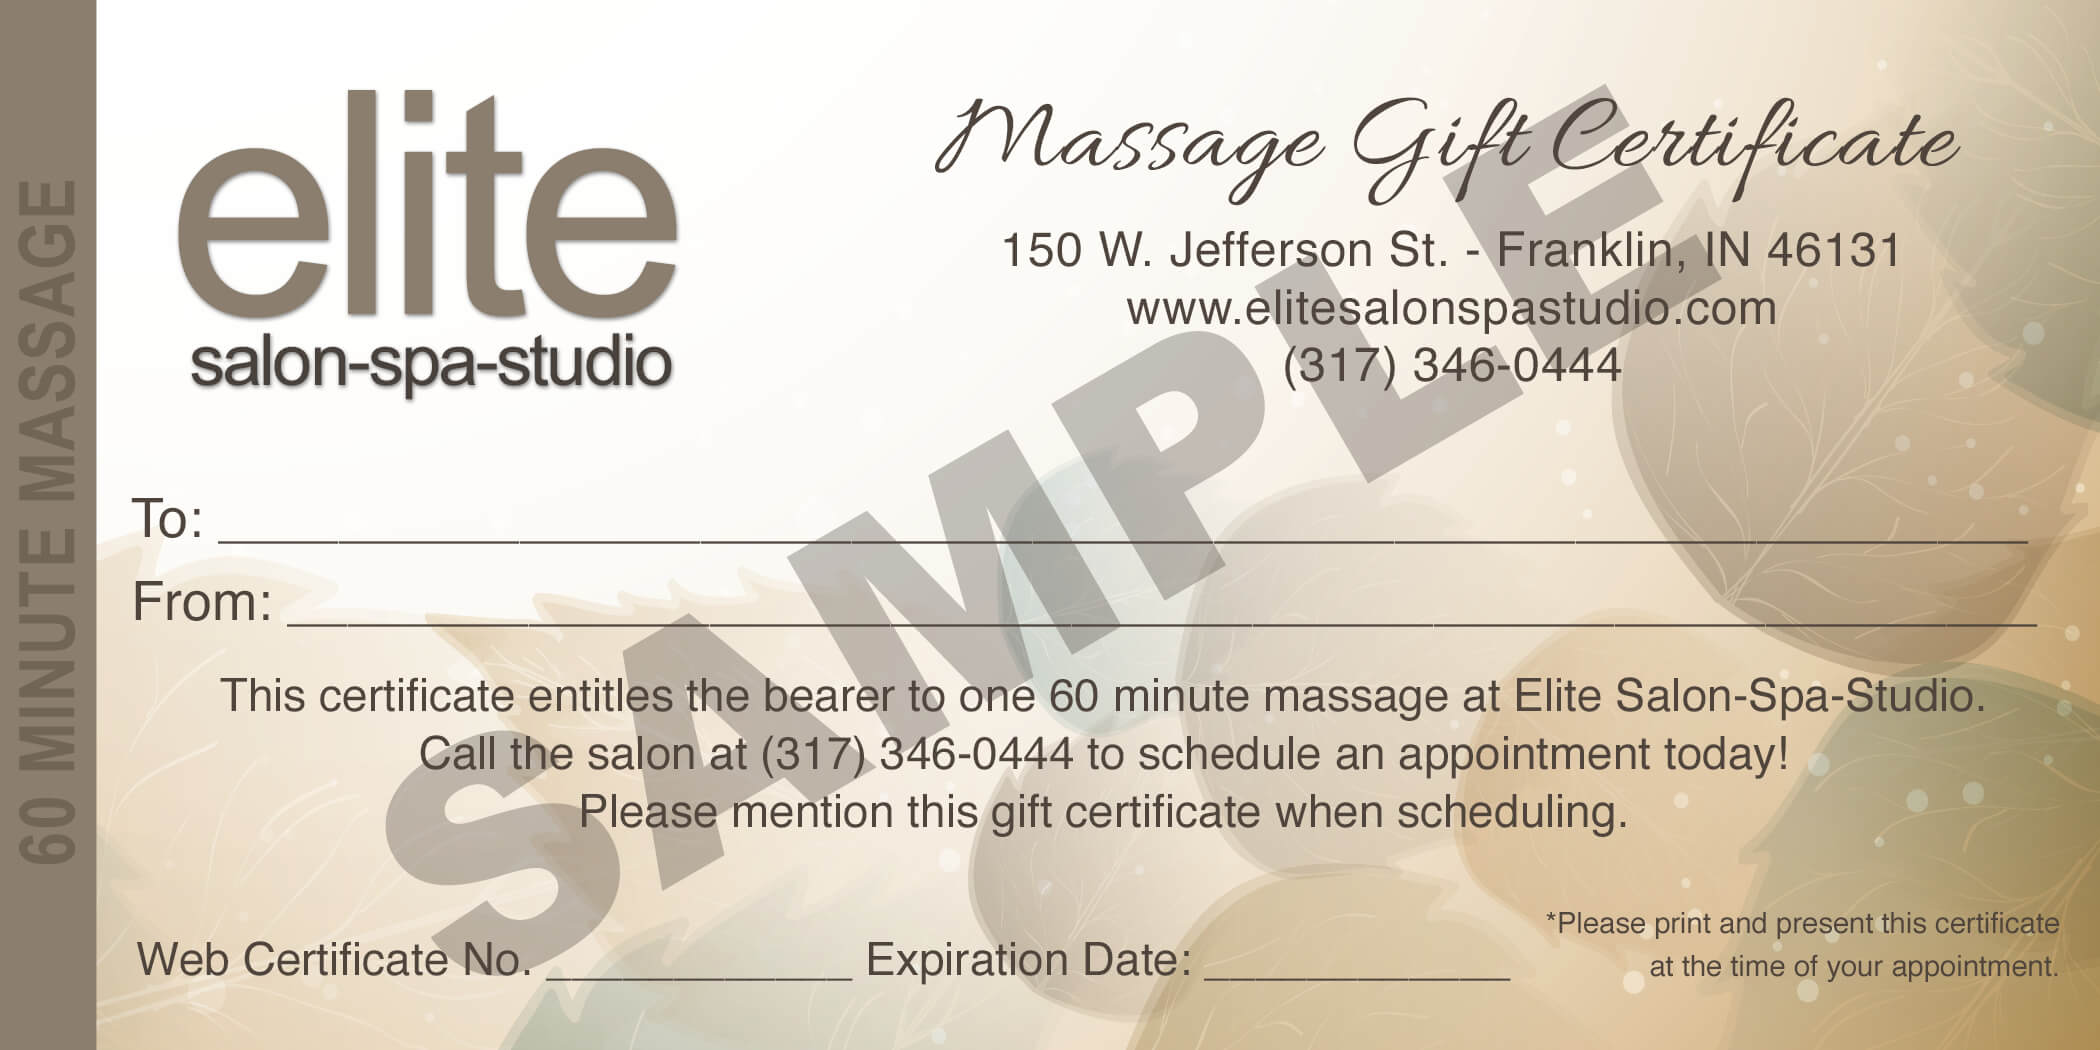 Massage Gift Certificate Sample – Elite Salon Spa Studio Within Salon Gift Certificate Template